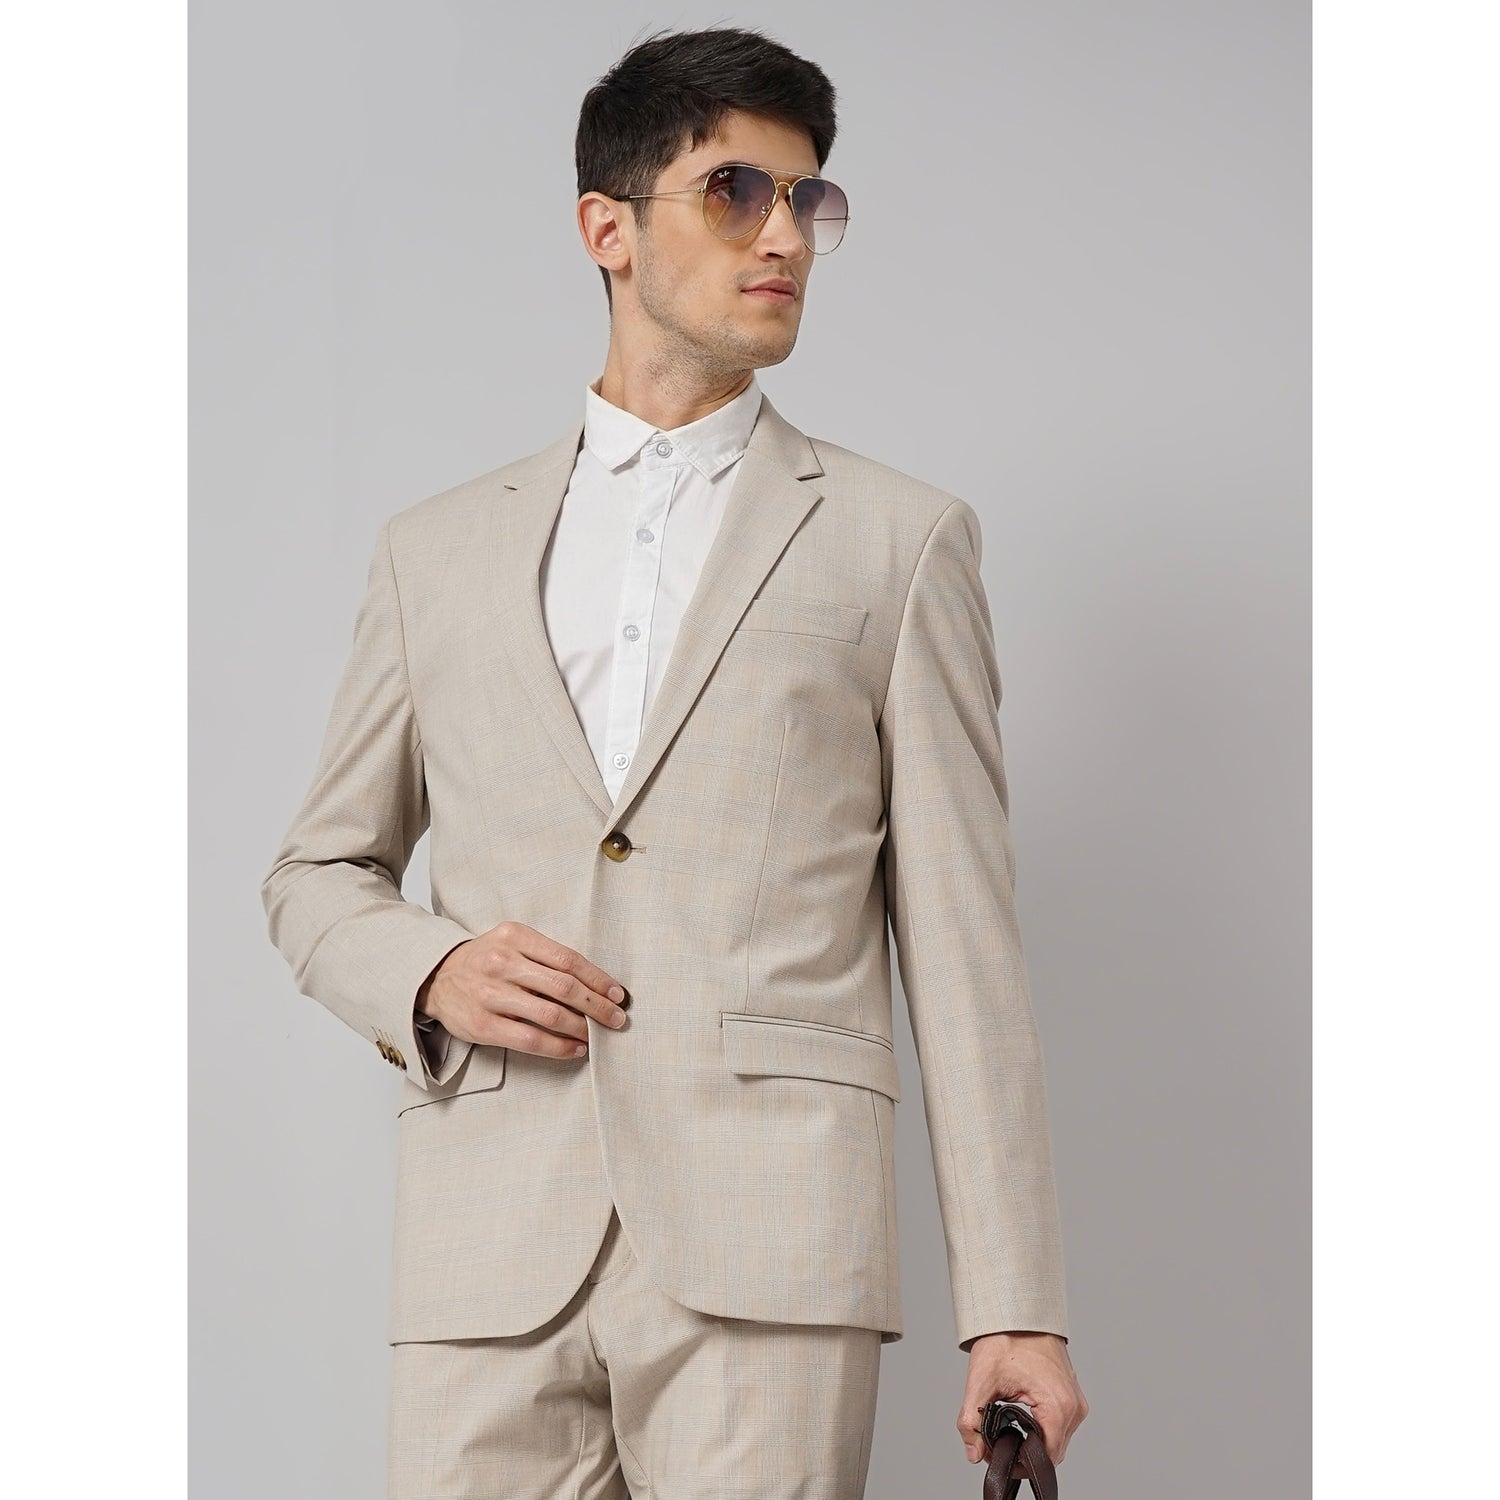 Men Beige Lapel Solid Slim Fit Polyester Suit Blazer (GUGABINFUN)